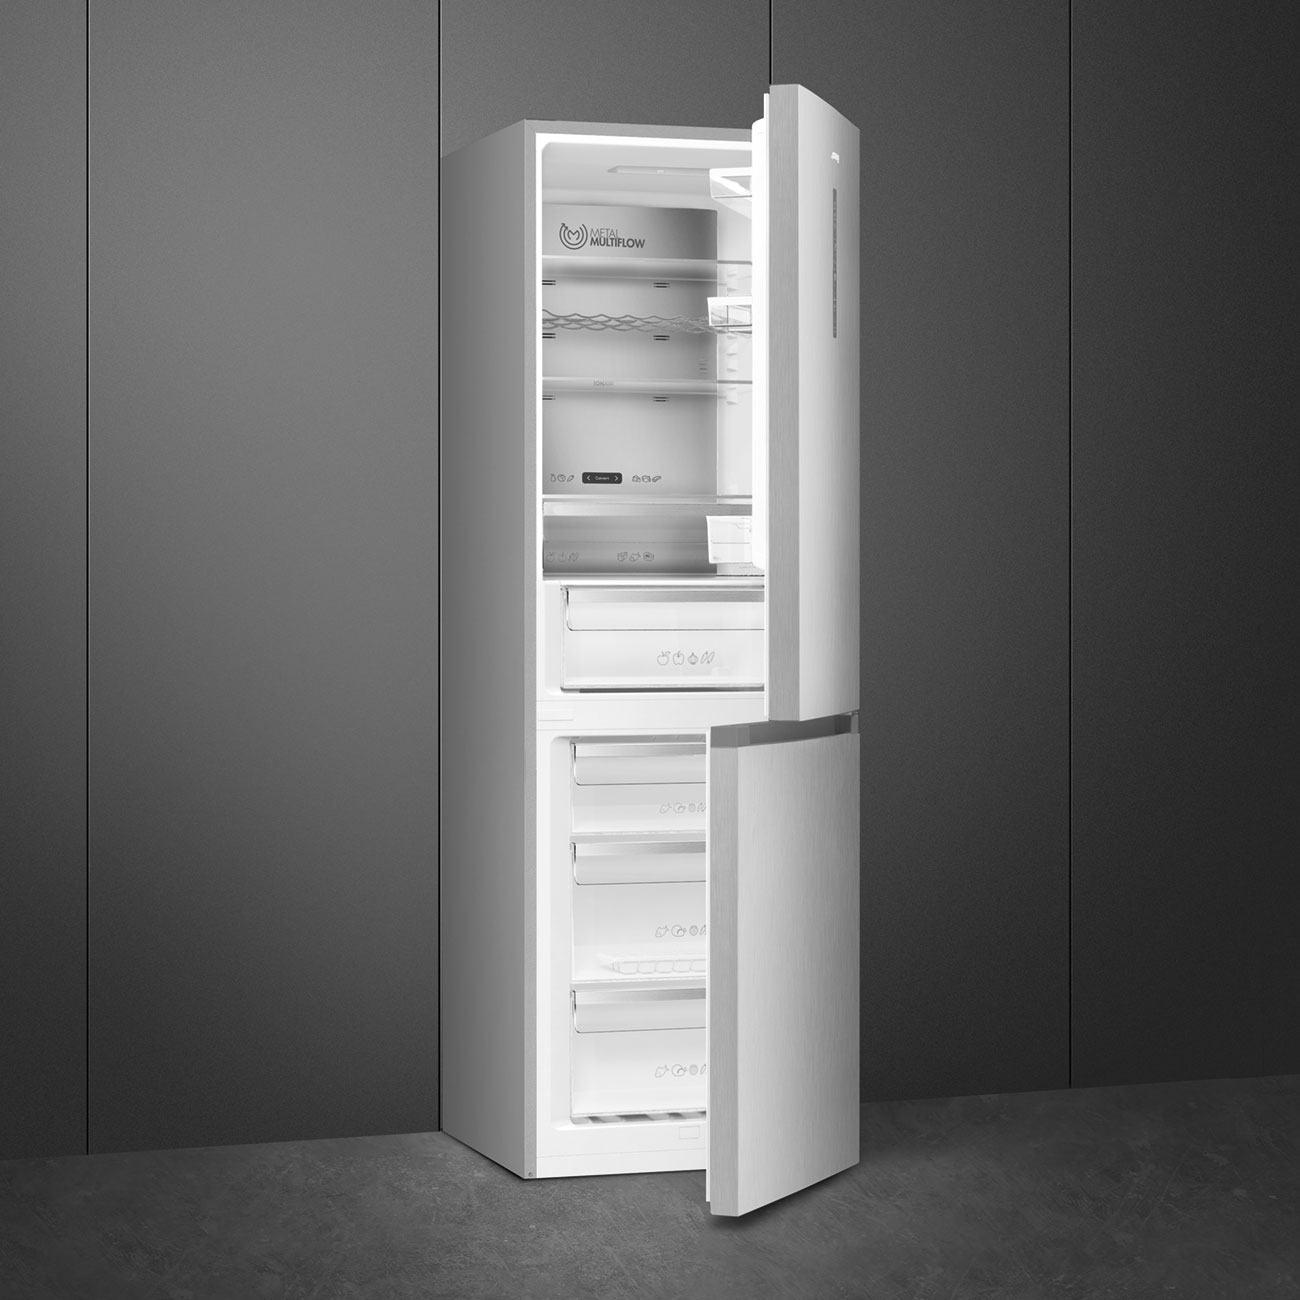 Bottom Mount Free standing refrigerator - Smeg_7